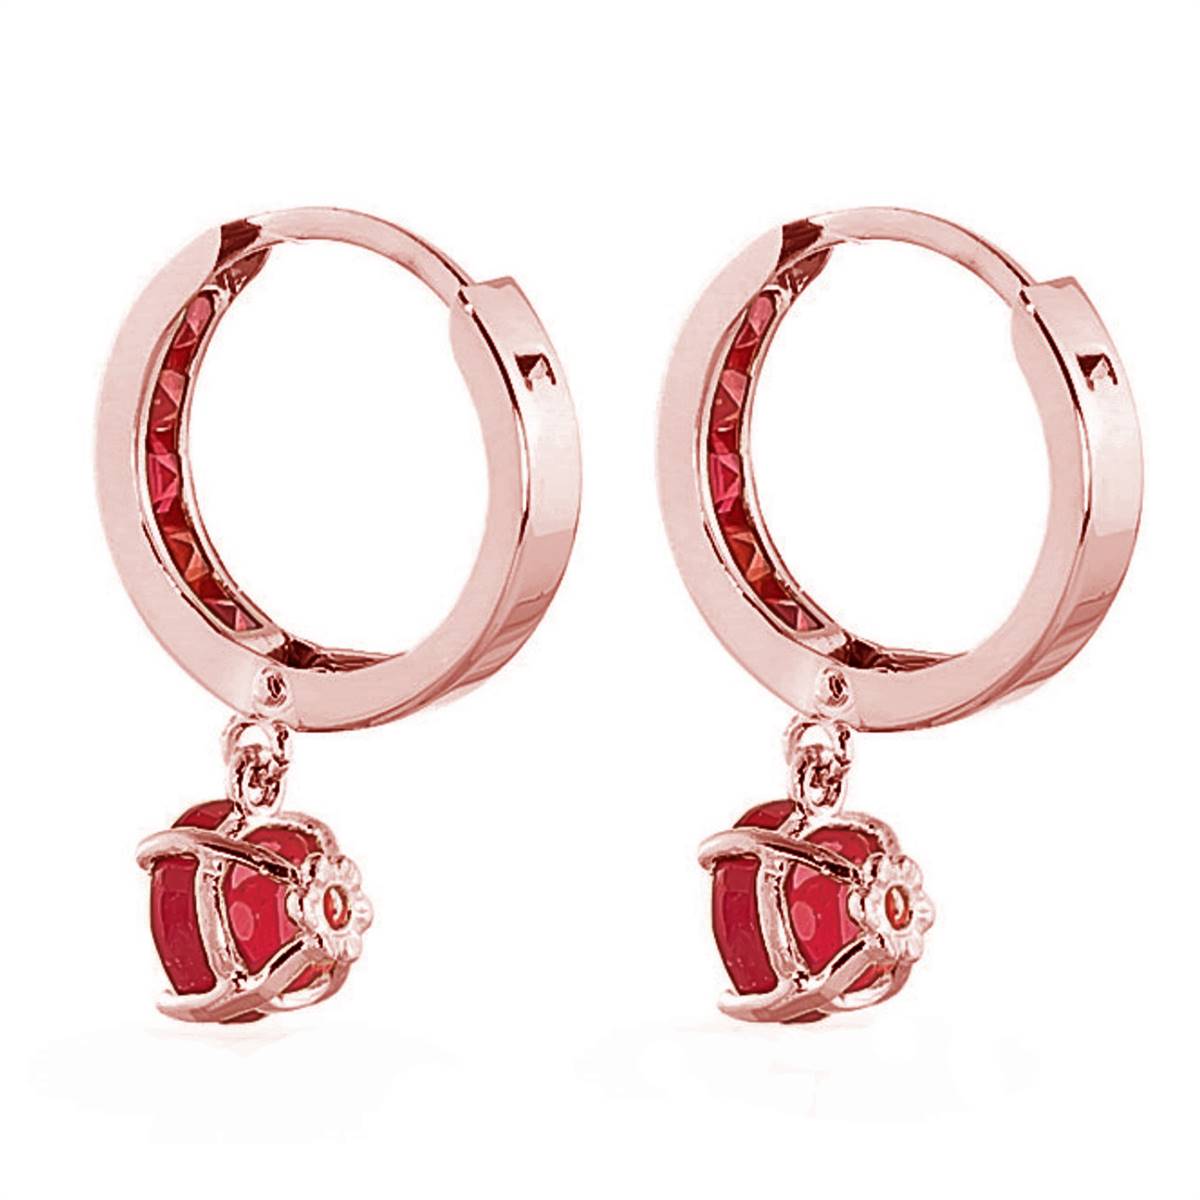 3.3 Carat 14K Solid Rose Gold Huggie Earrings Natural Ruby